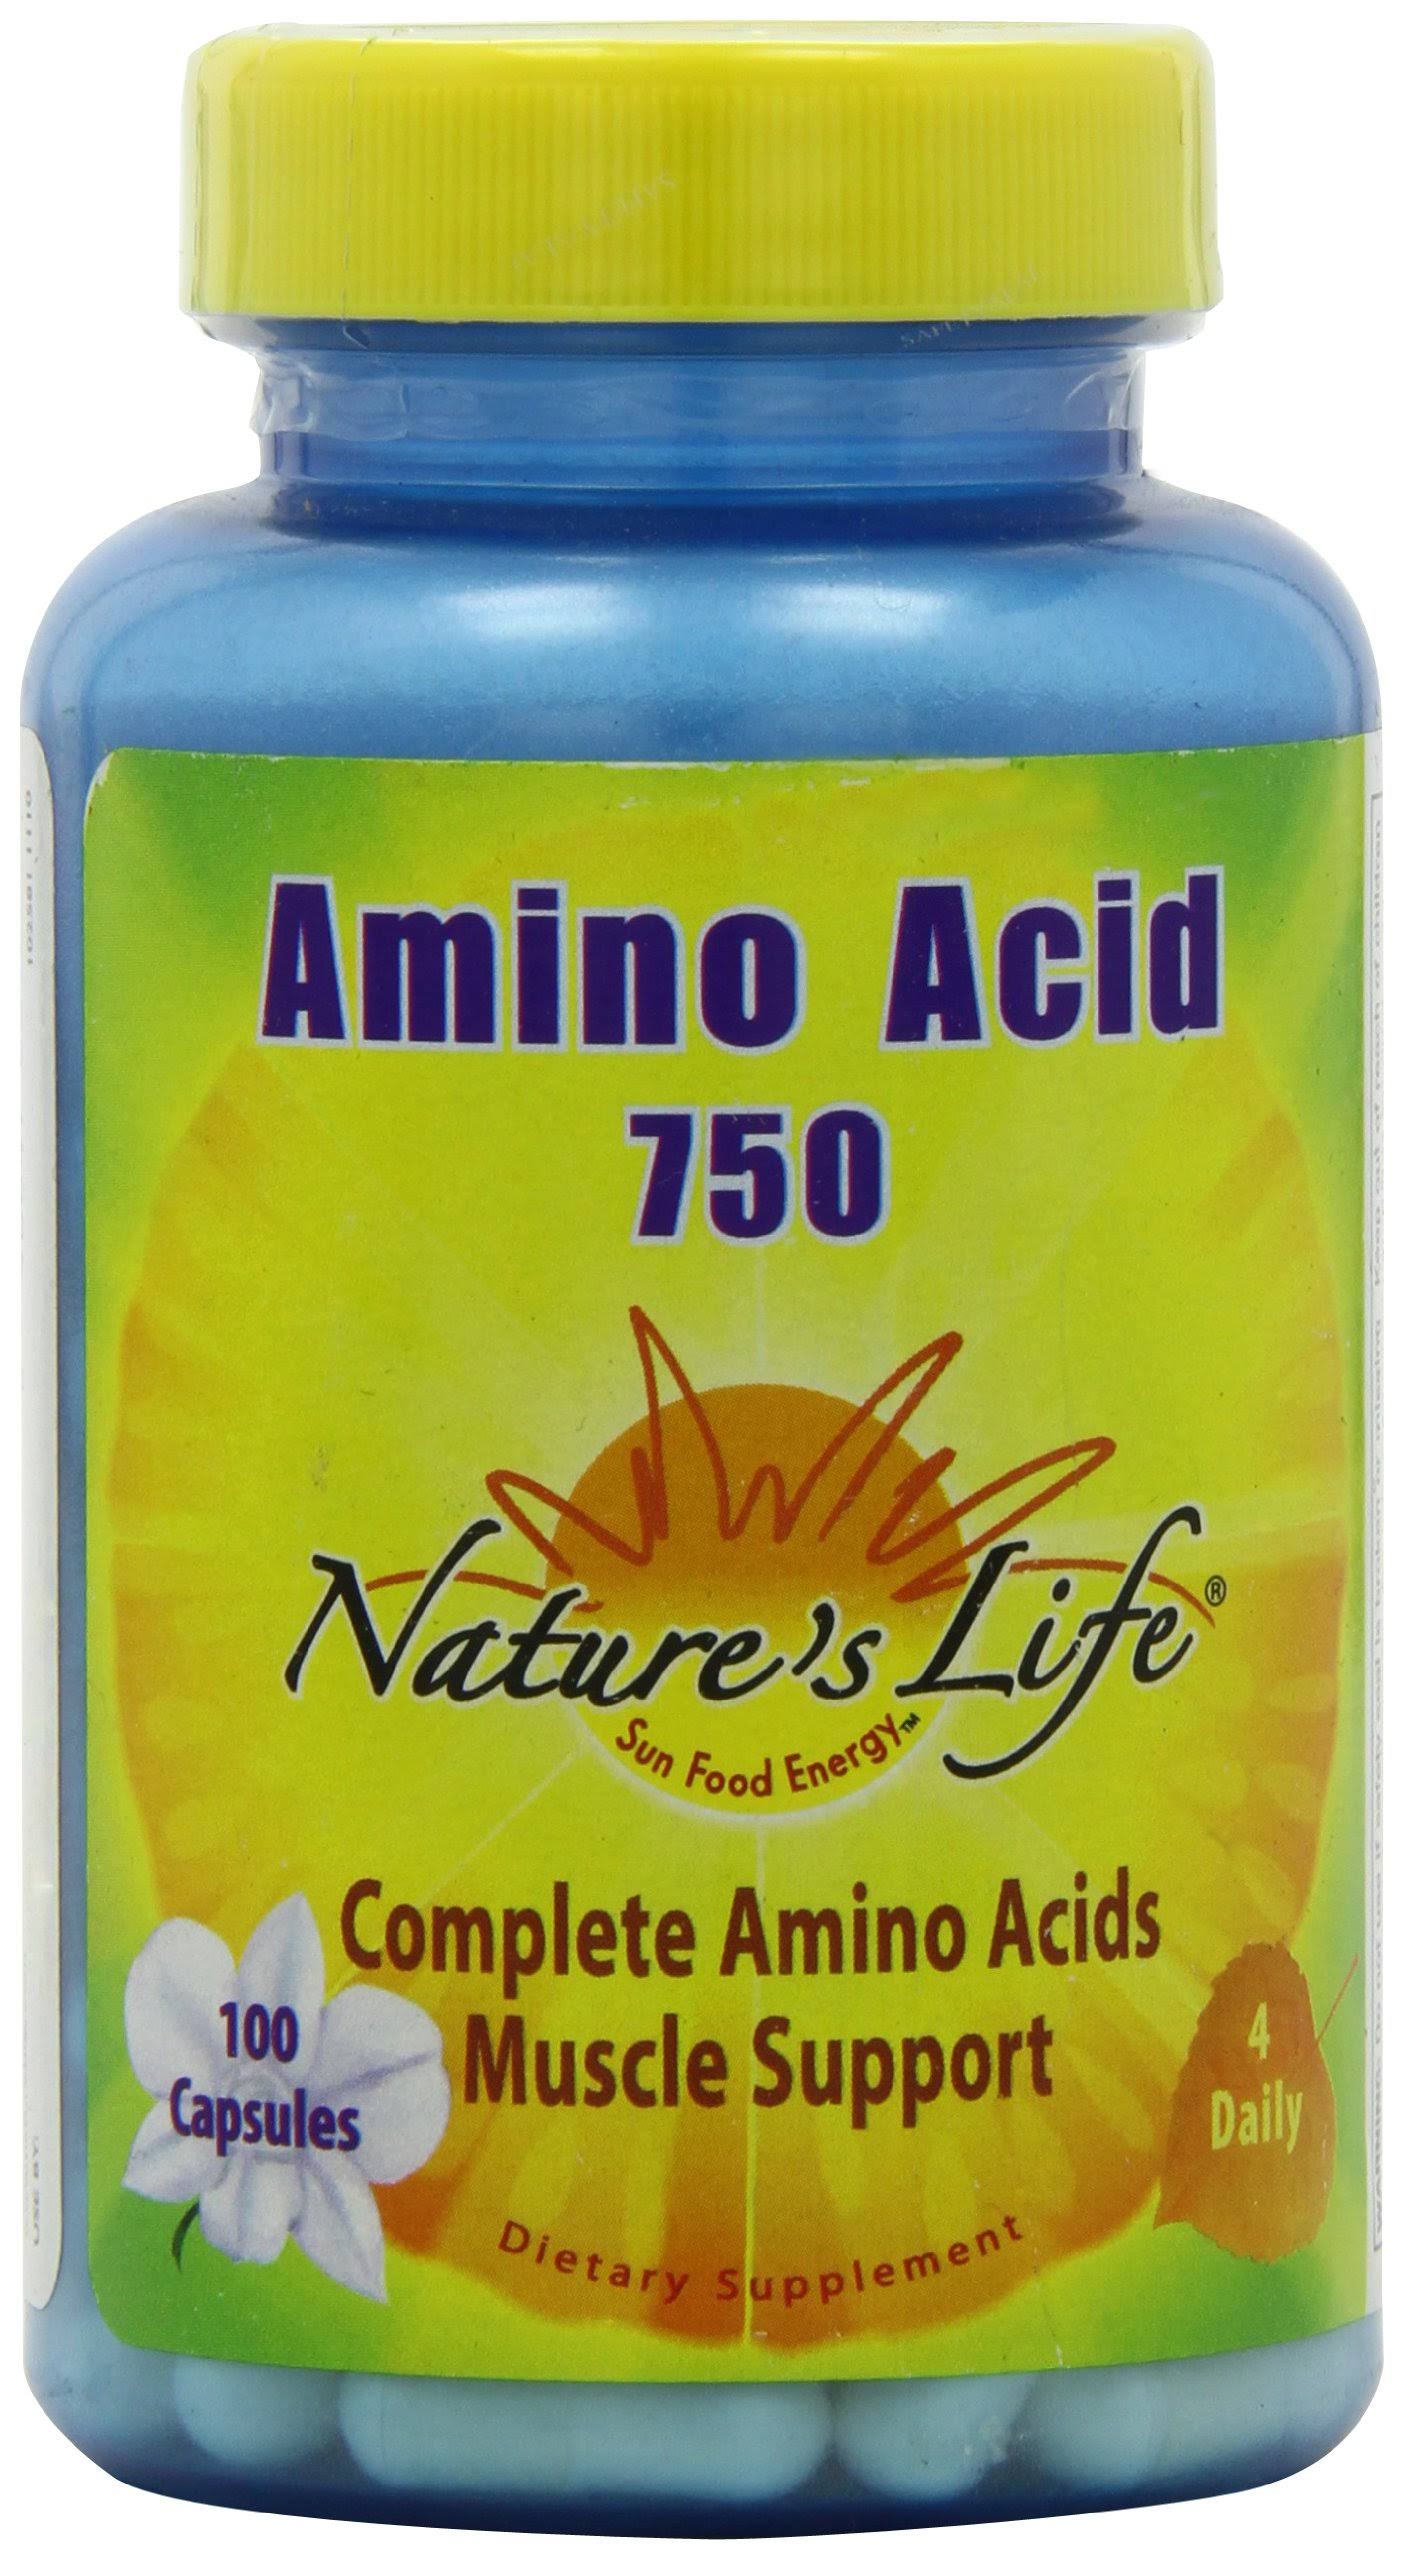 Nature's Life Amino Acid 750 - 100 Caps